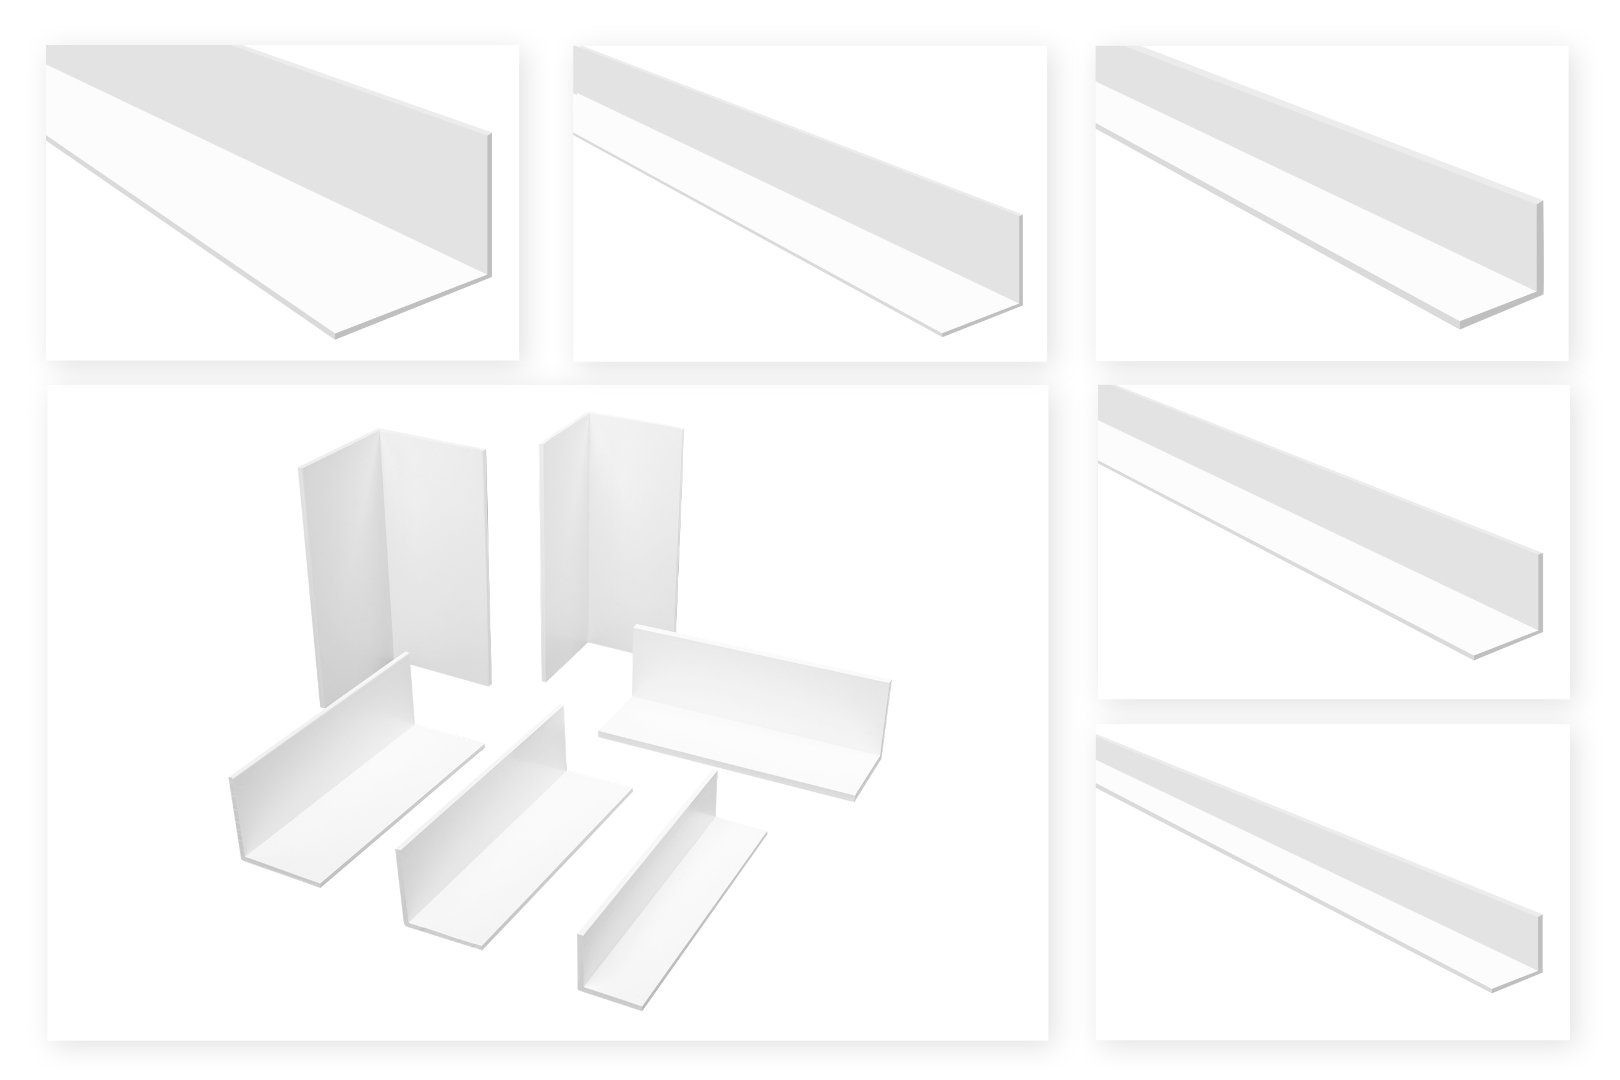 Hexim Winkelprofil Winkelleiste 306 - gleichschenklig (Winkelprofile gleichschenklig weiß - PVC Kunststoffwinkel, Auswahl Maße & Stärke (15x15mm) Kunststoff Winkelprofil Fensterleisten)